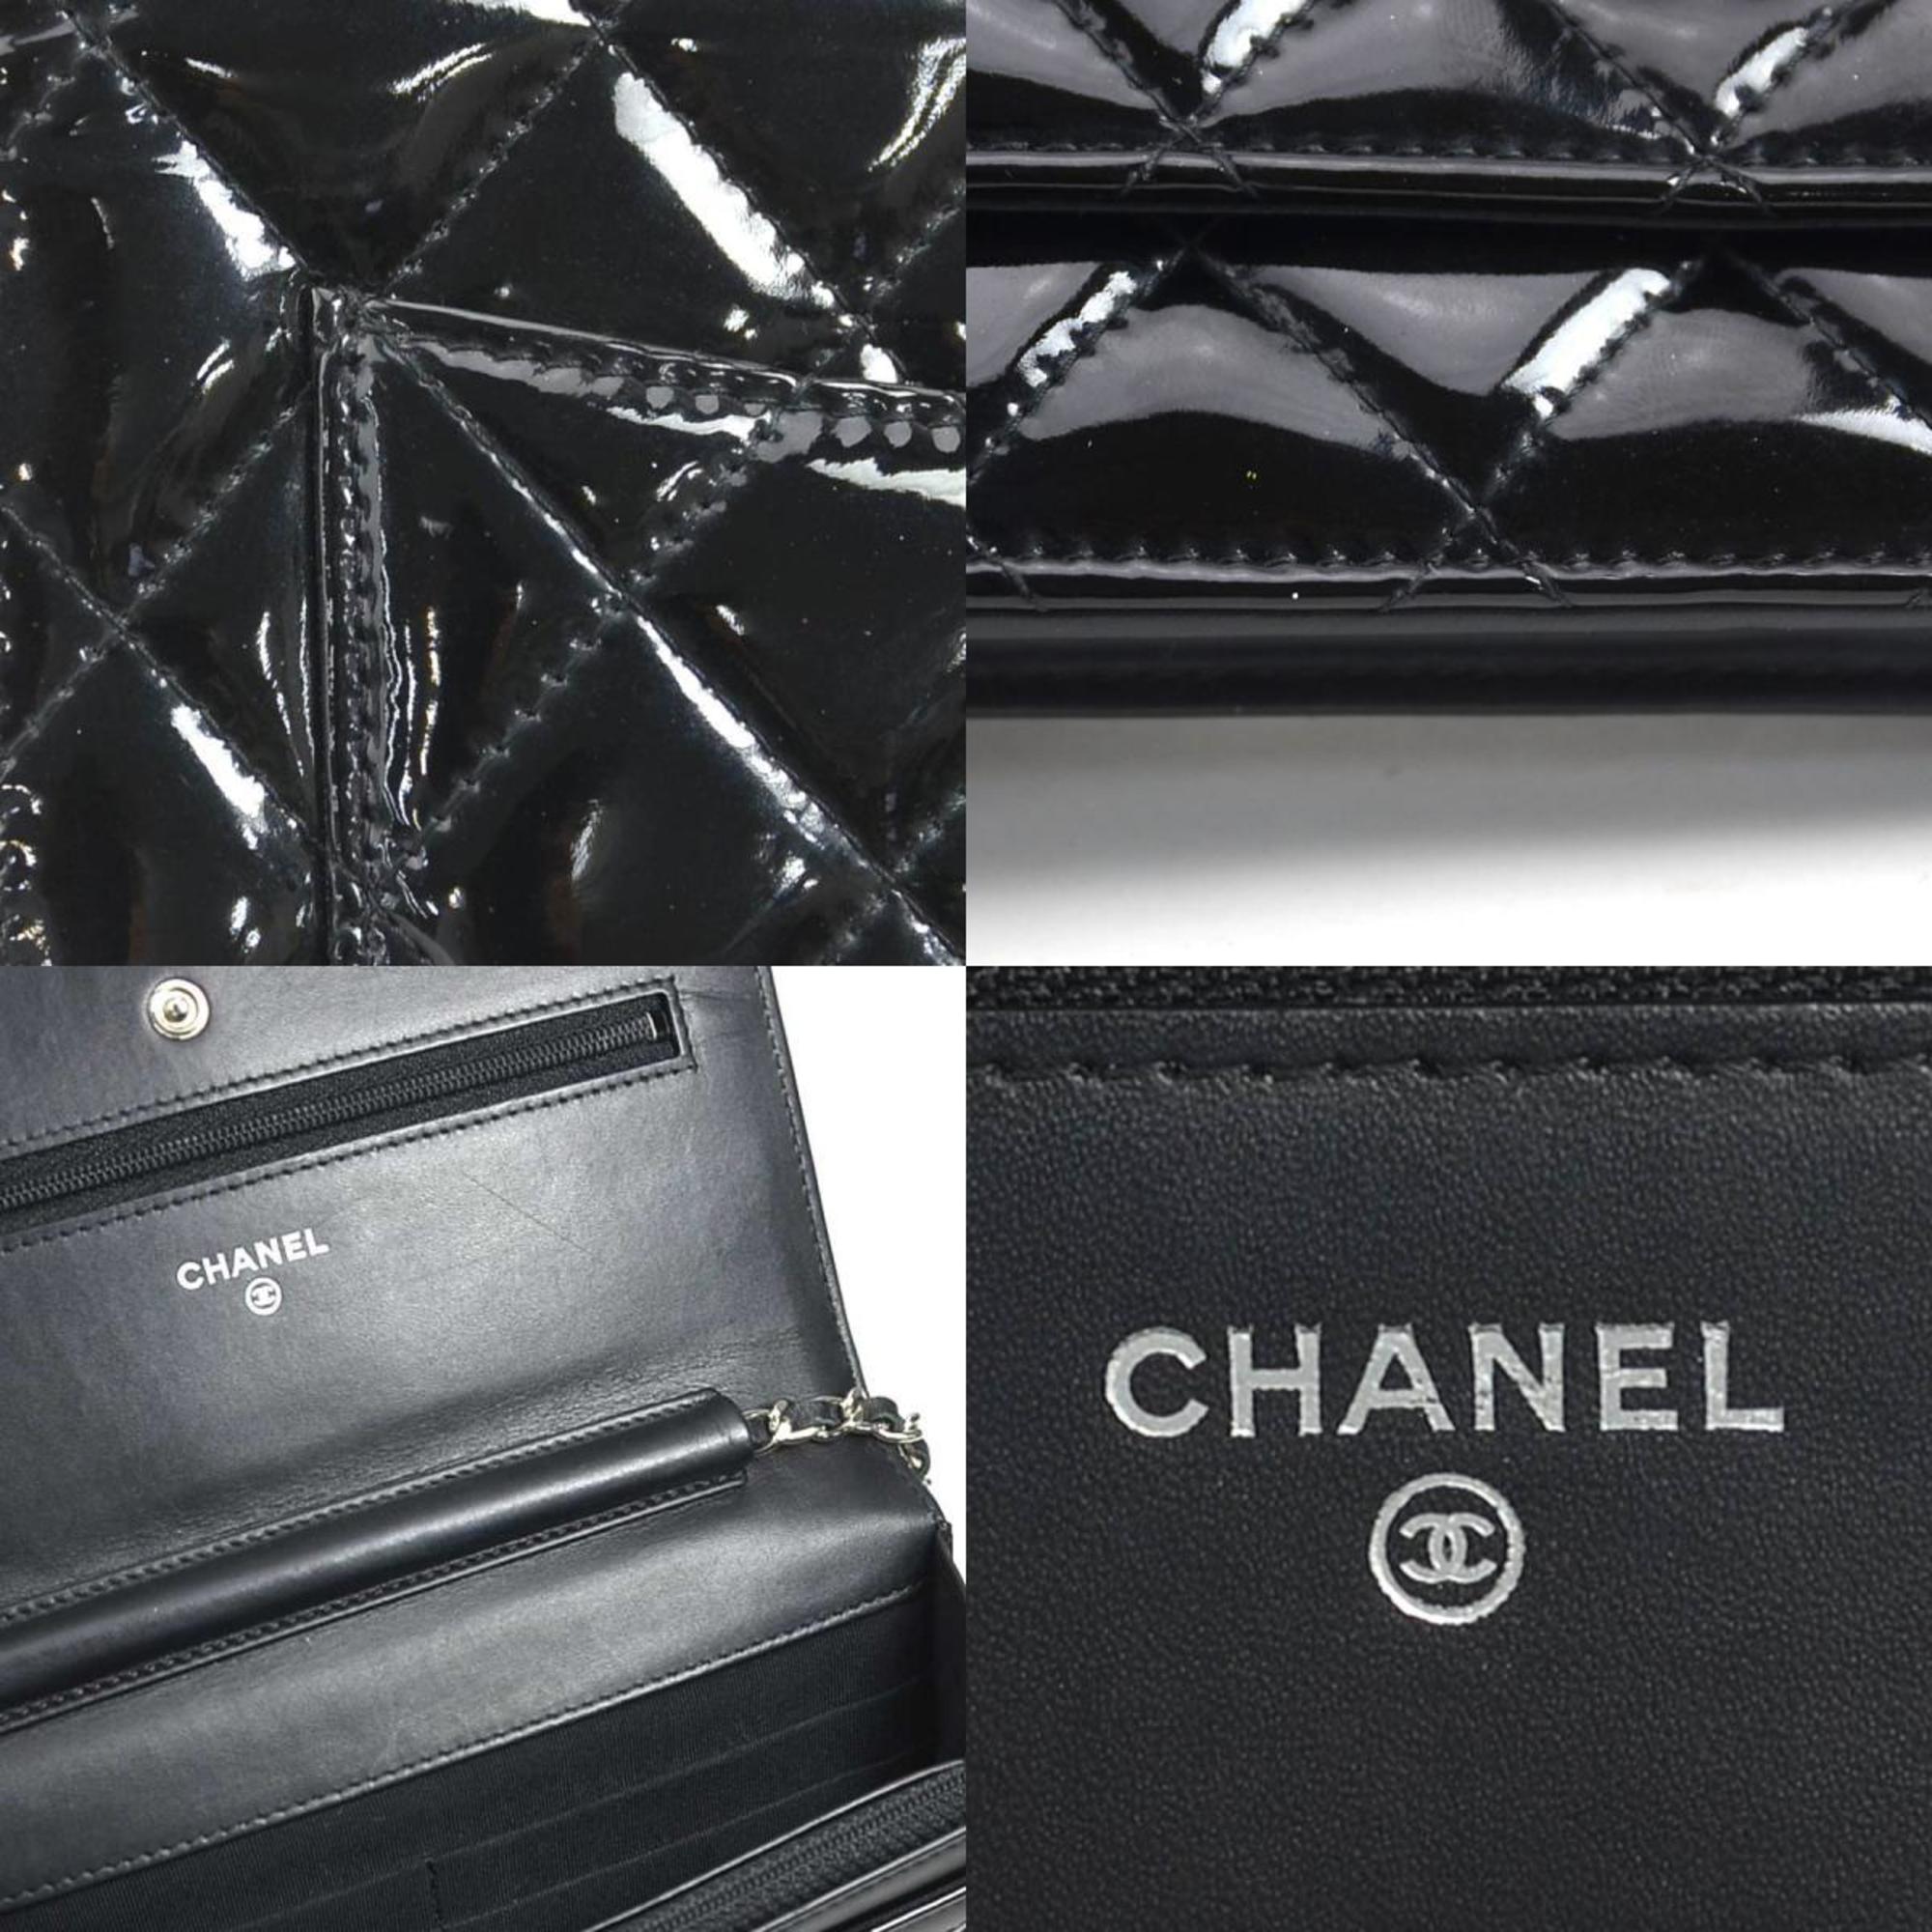 CHANEL Wallet Chain Matelasse Patent Leather/Metal Black/Silver Women's